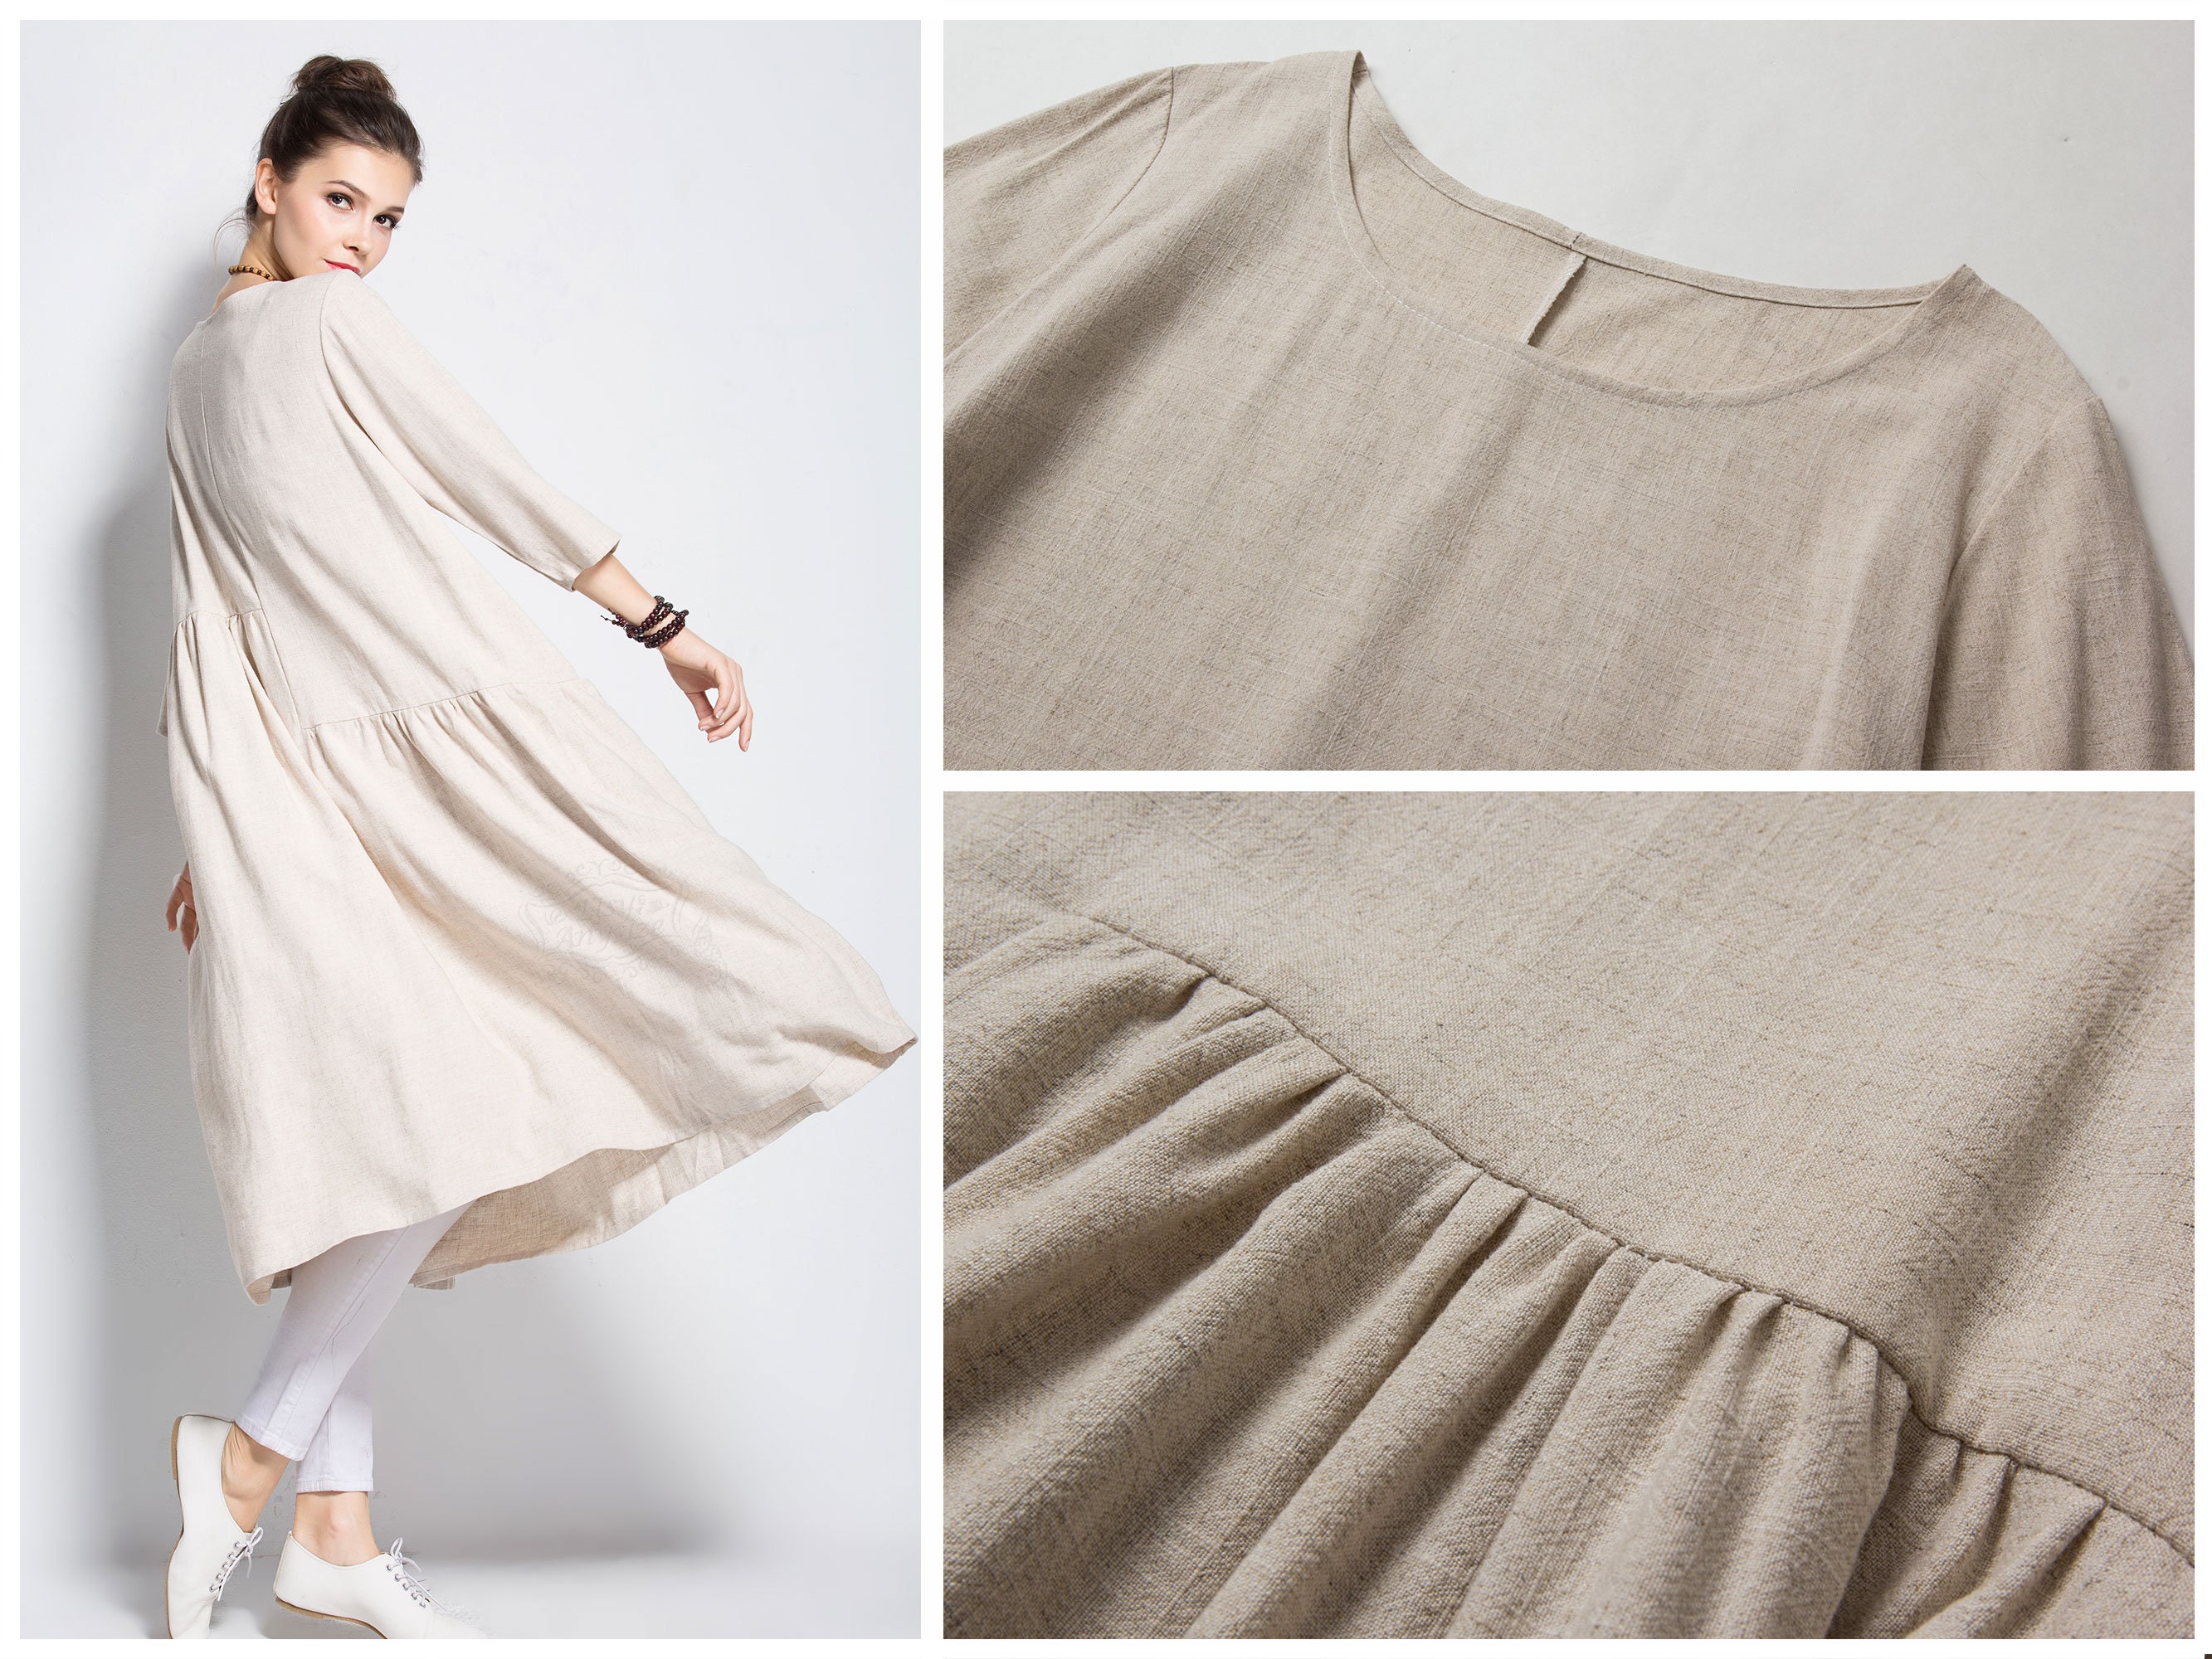 Everyday attire ☁️ - 100% cotton - Fleece lined - Soft, stretchy